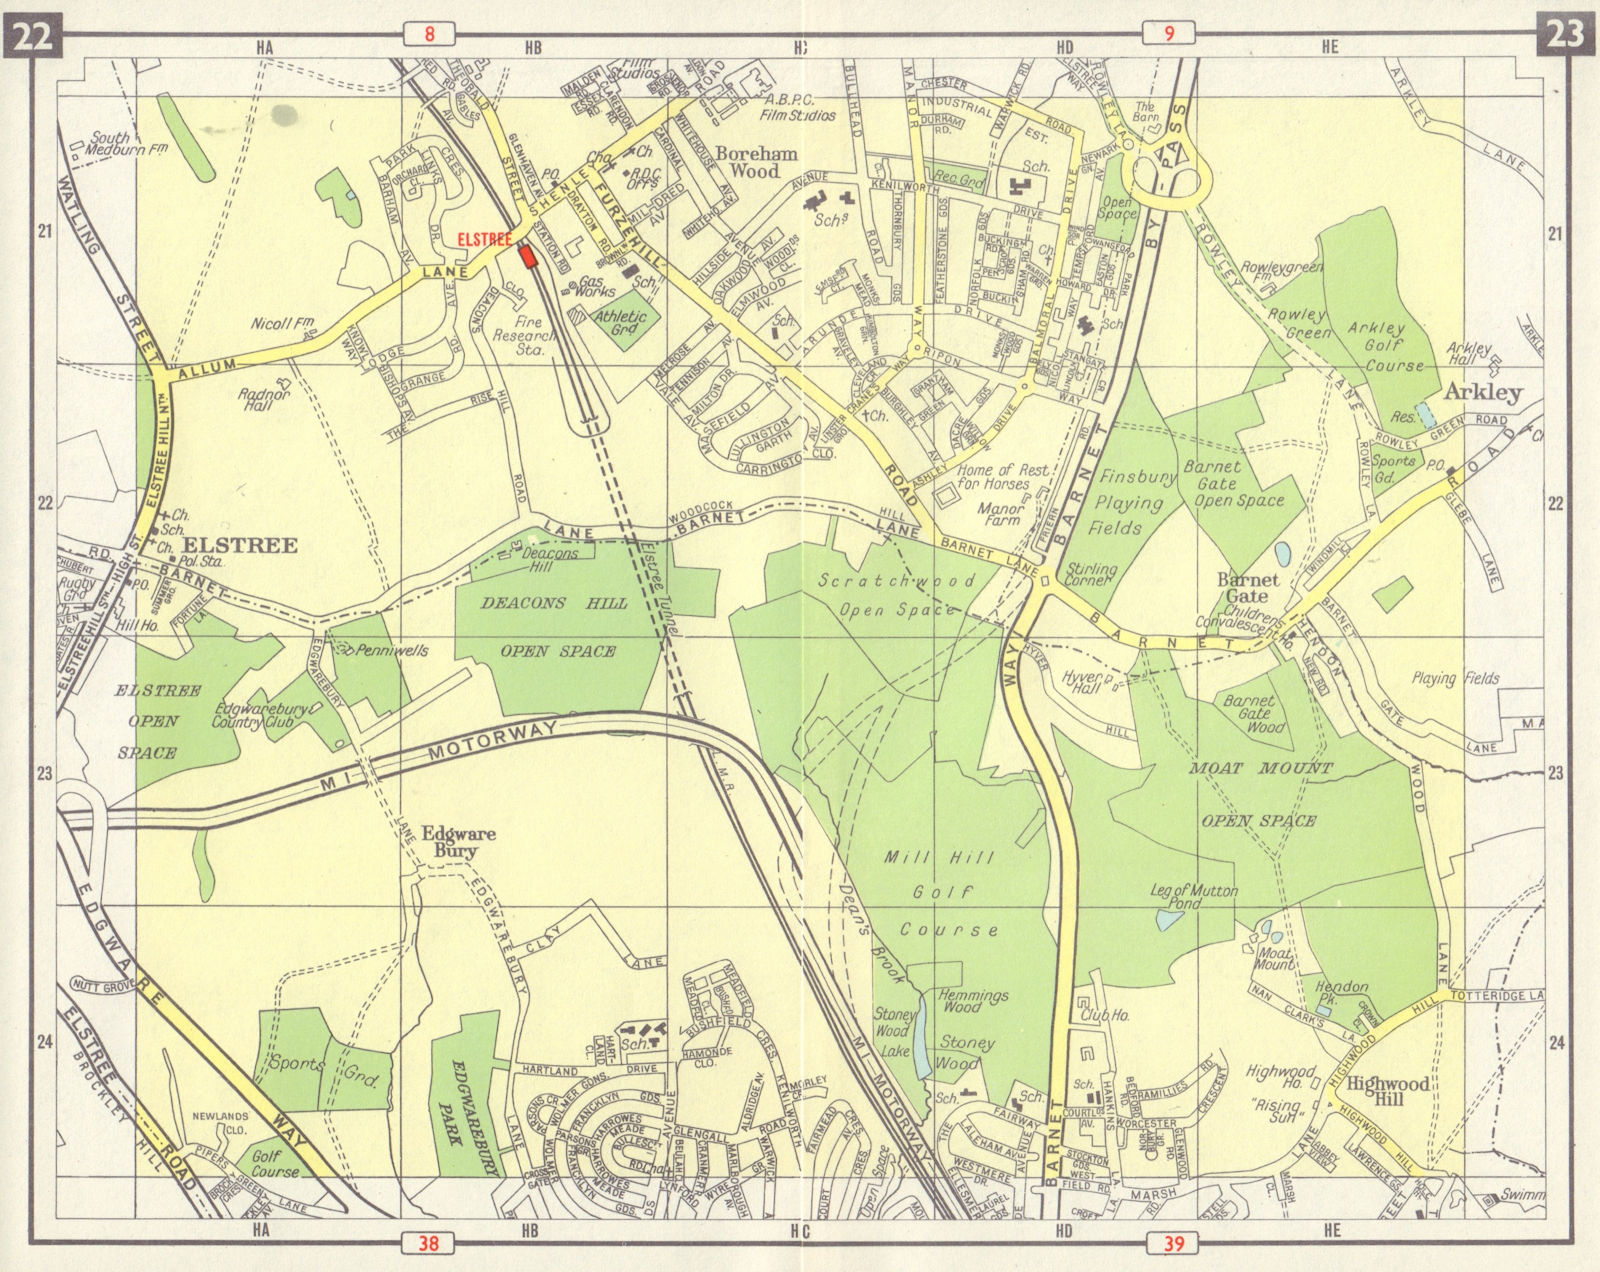 NW LONDON Elstree Borehamwood Edgwarebury Barnet Highwood Hill M1 open 1965 map